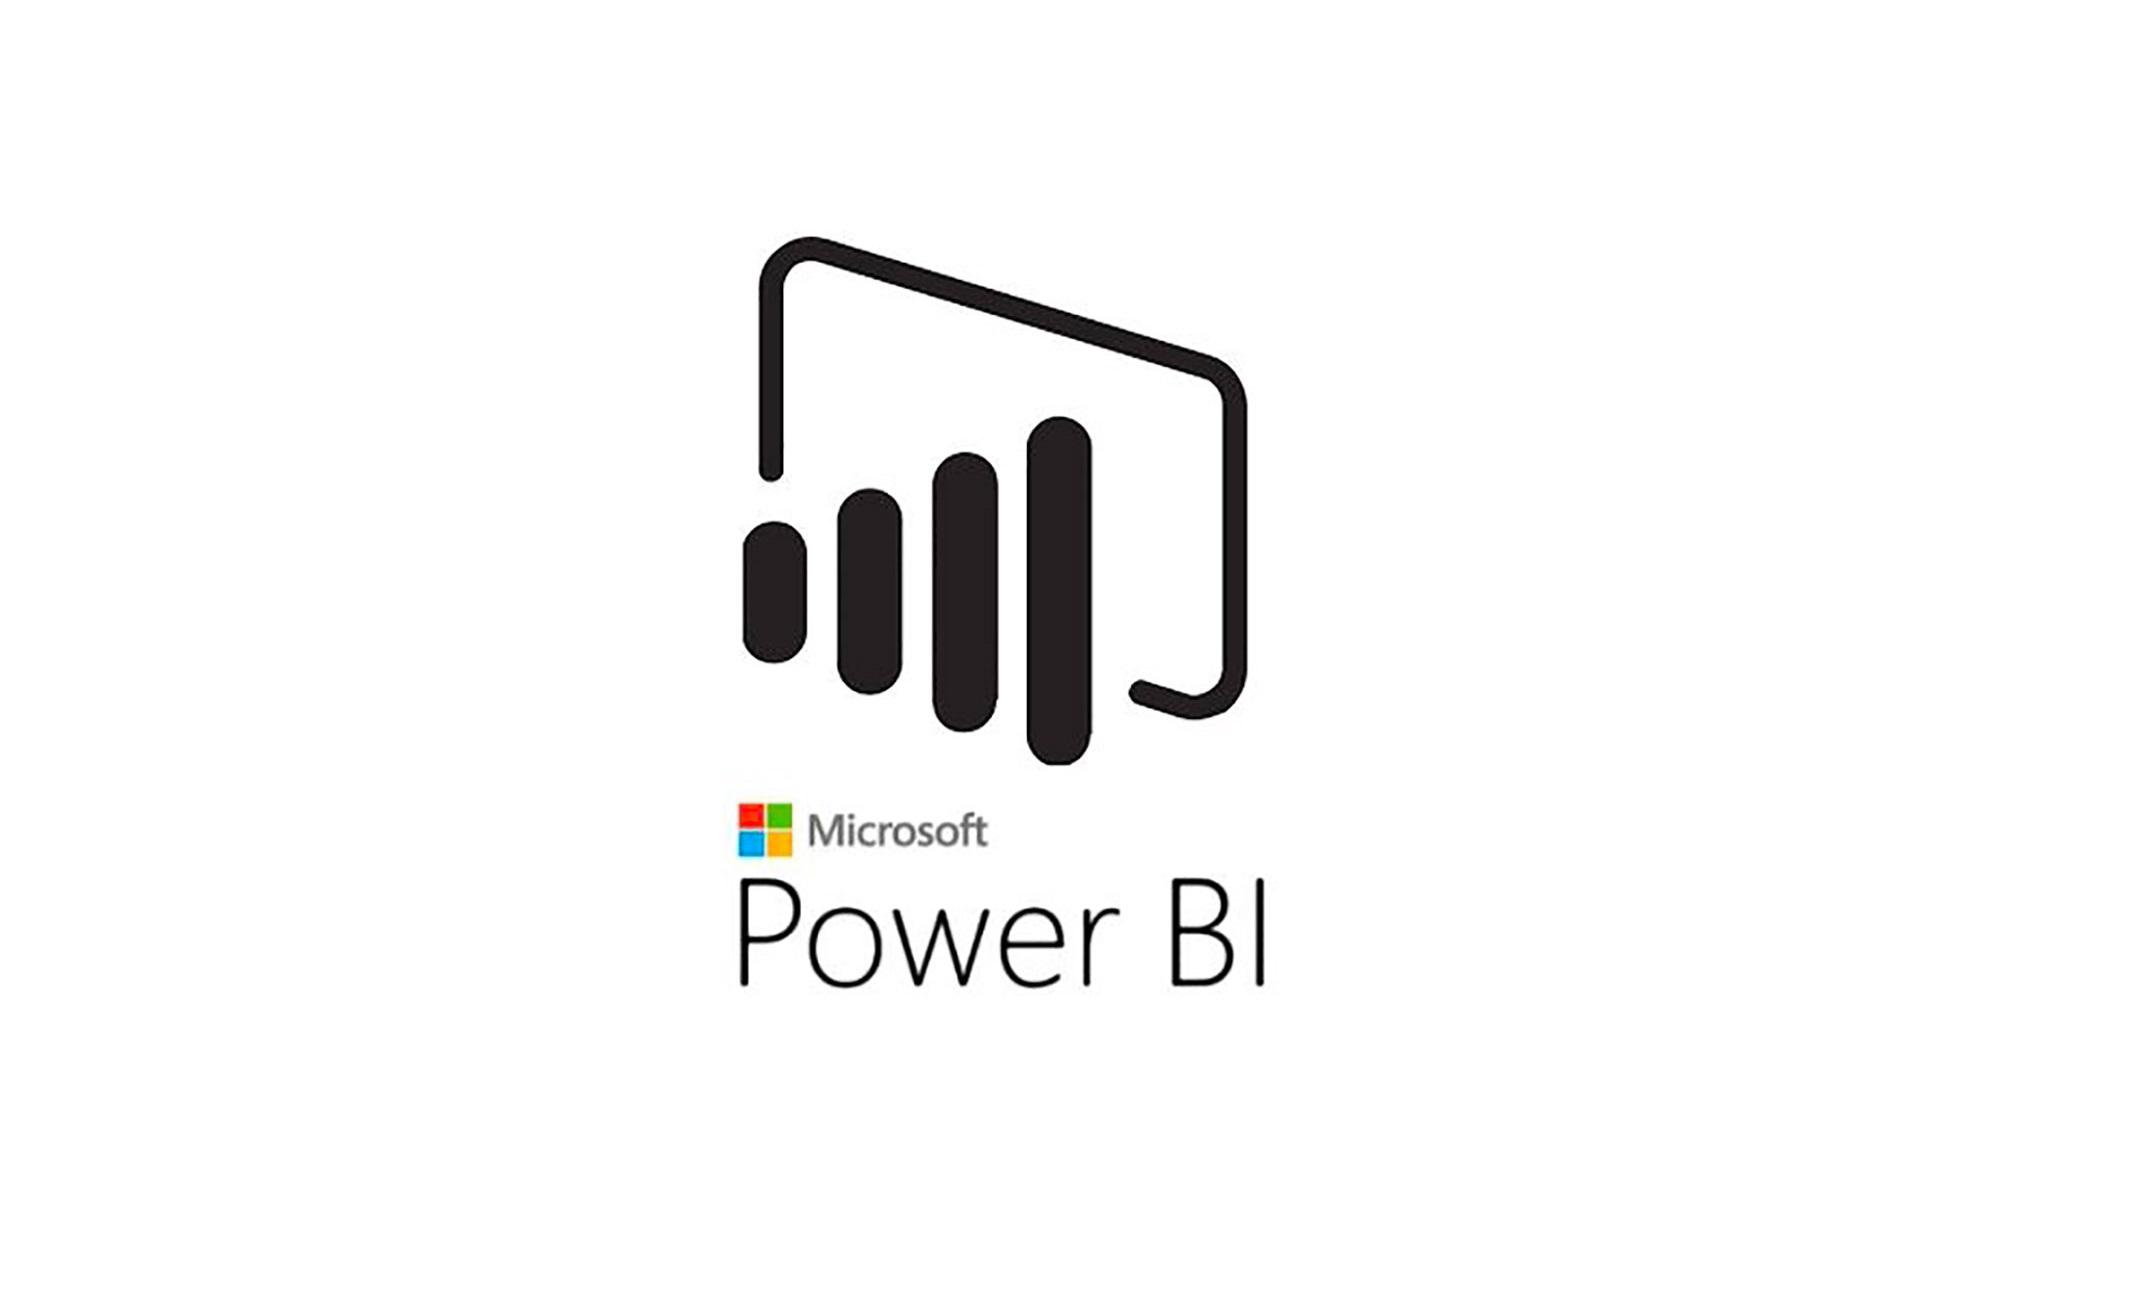 Microsoft Power BI Training in Cincinnati | Introduction to Power BI training for beginners | Getting started with Power BI | What is Power BI | January 20, 2020 - February 12, 2020